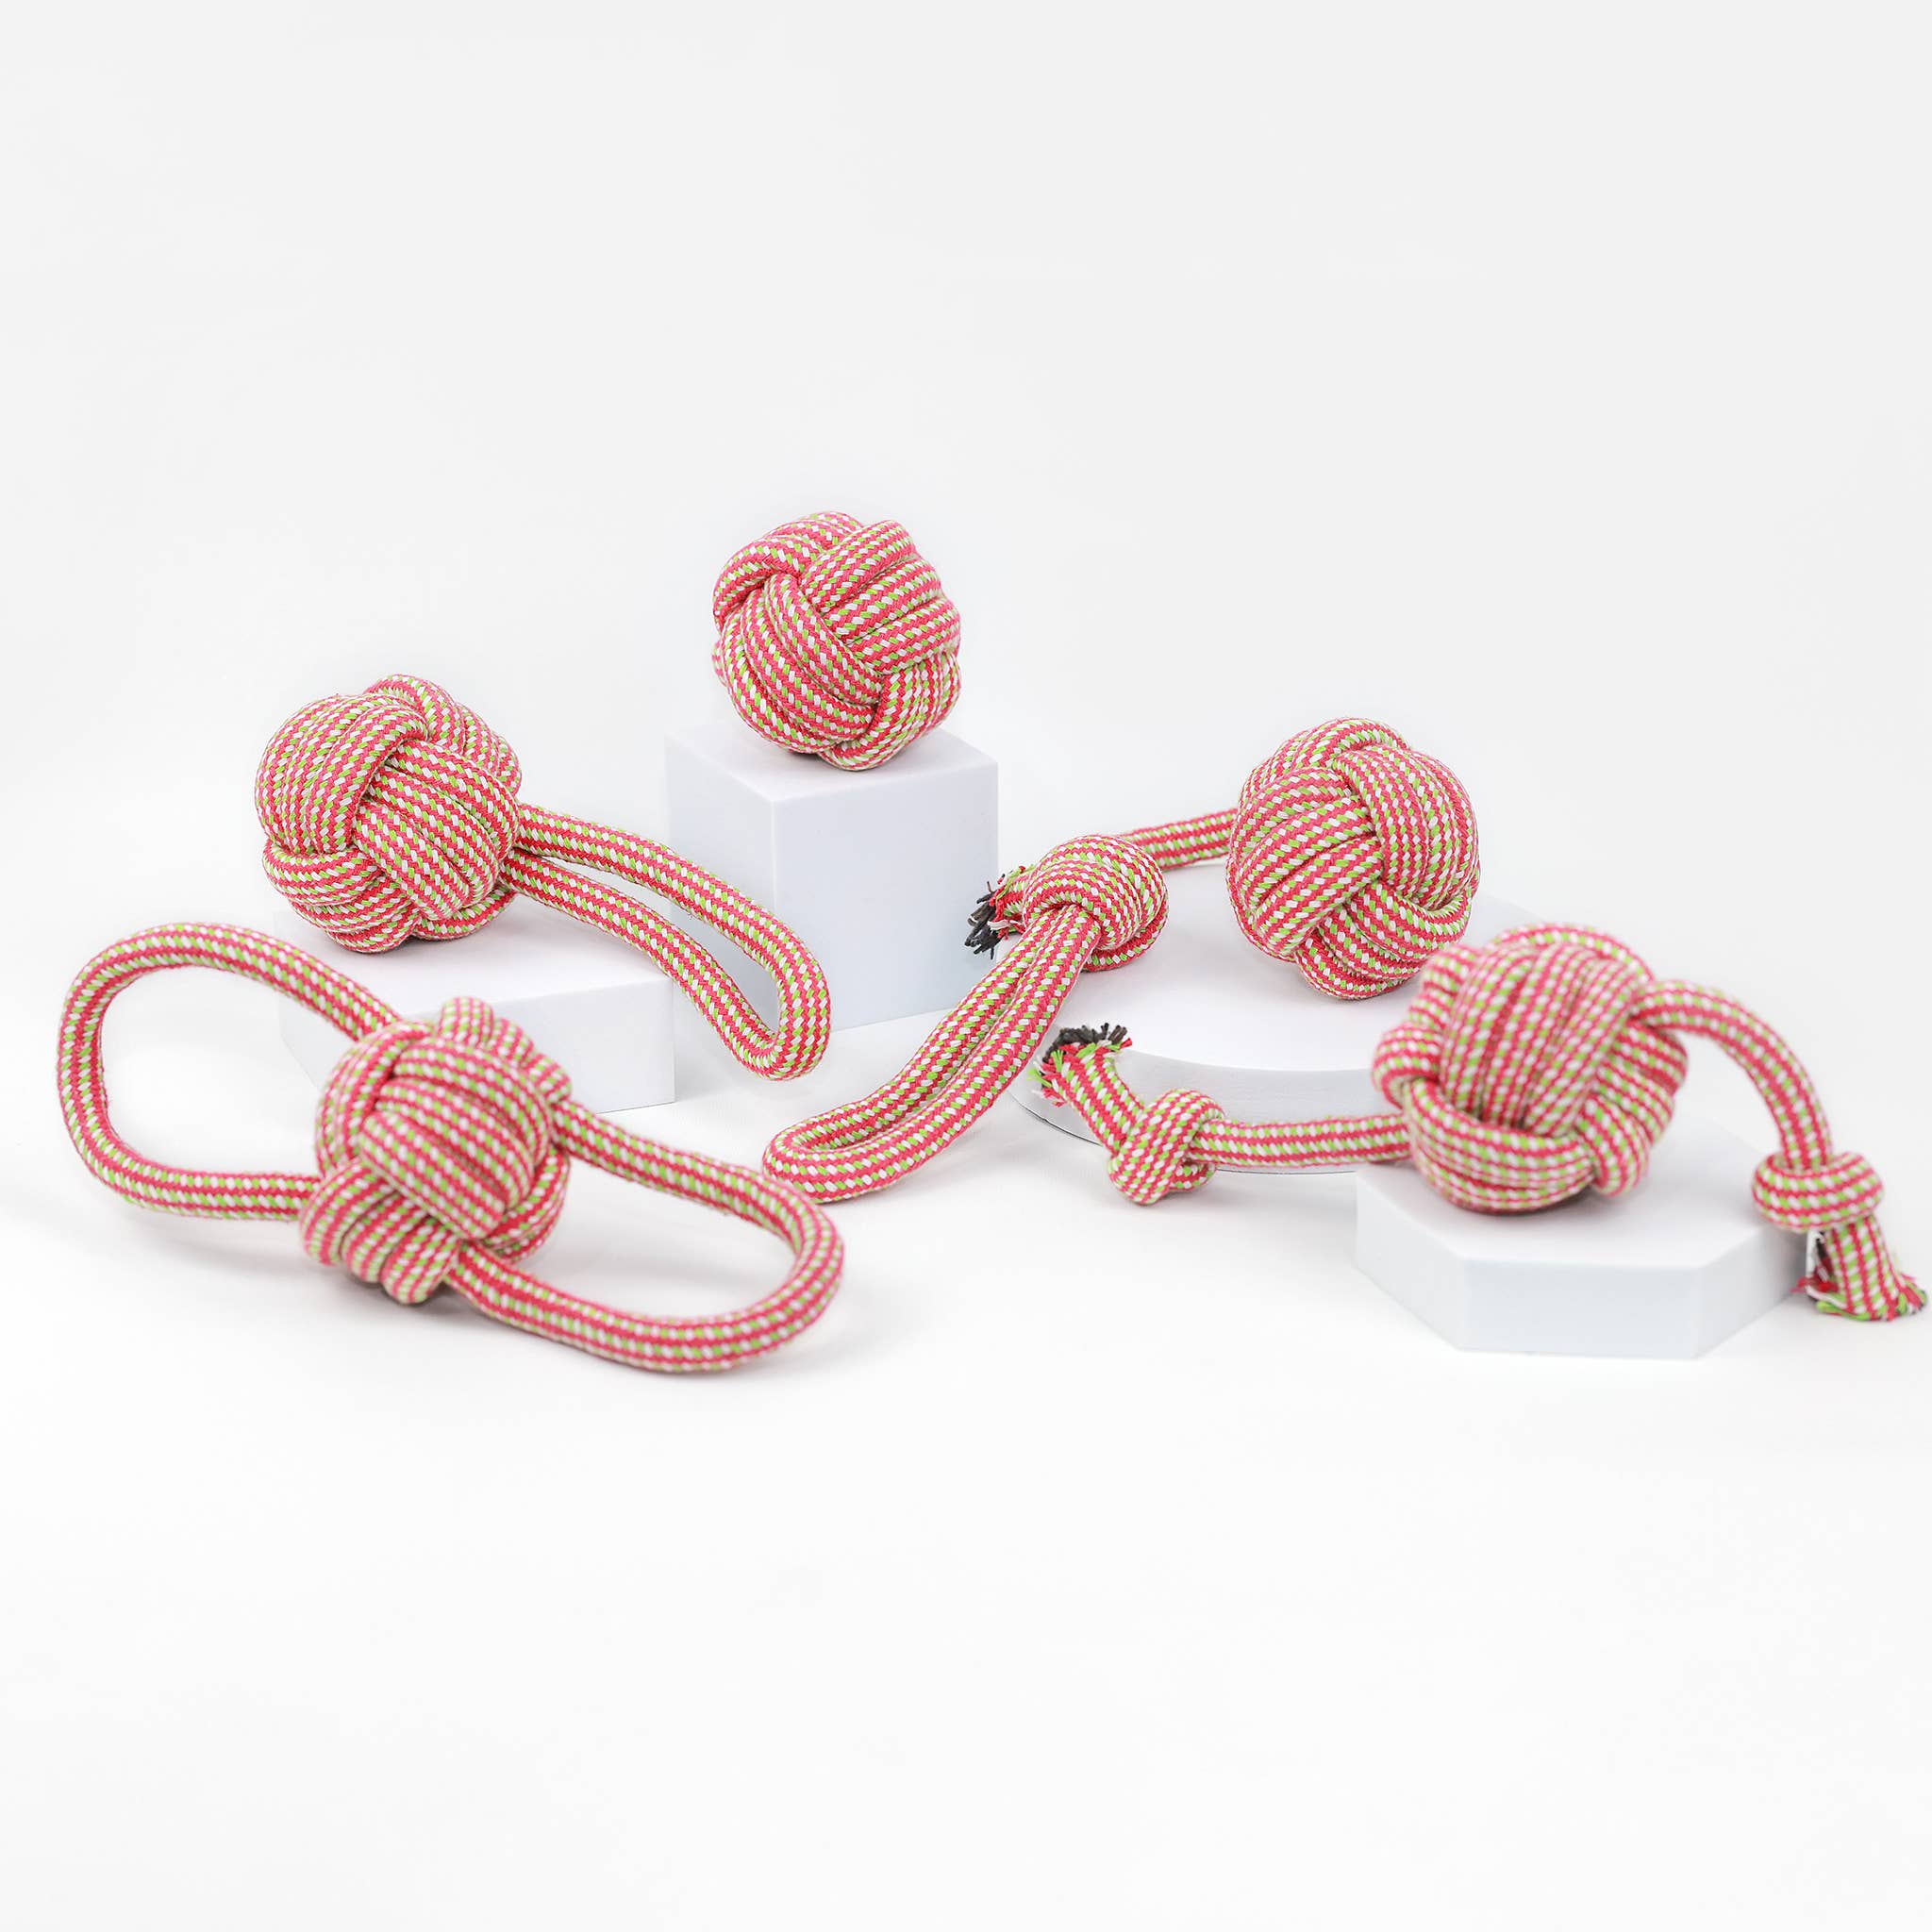 CSCORD International LLC - Pink and Green Tug Rope Ball | Handmade| Sustainable| Loop